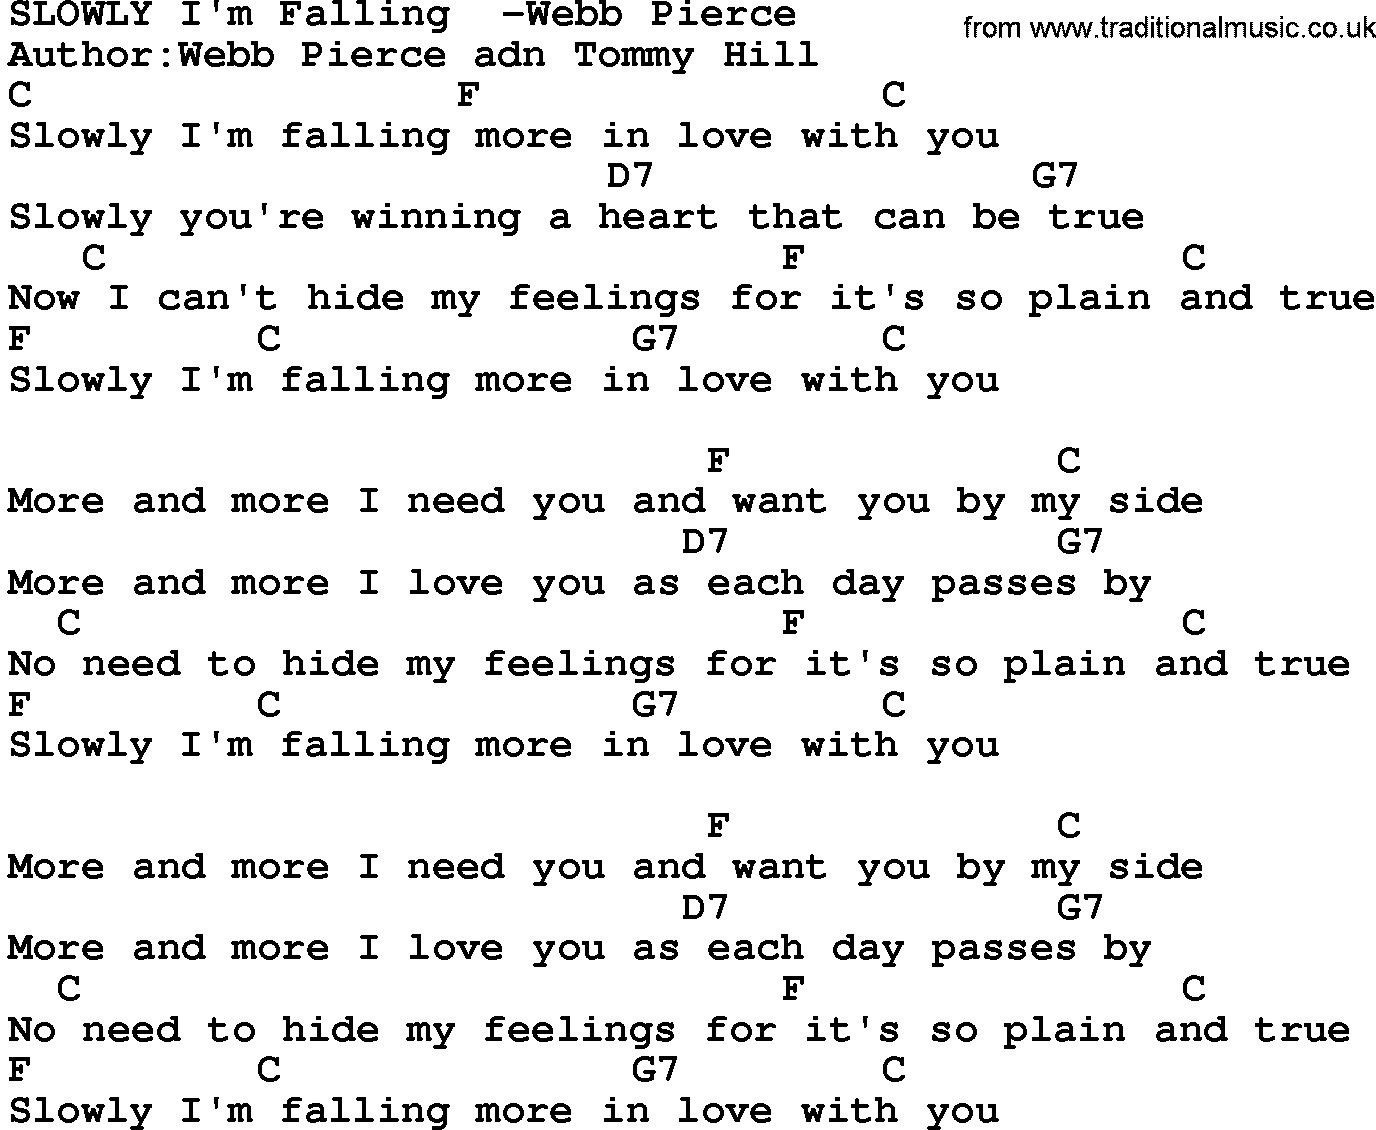 Country music song: Slowly I'm Falling -Webb Pierce lyrics and chords